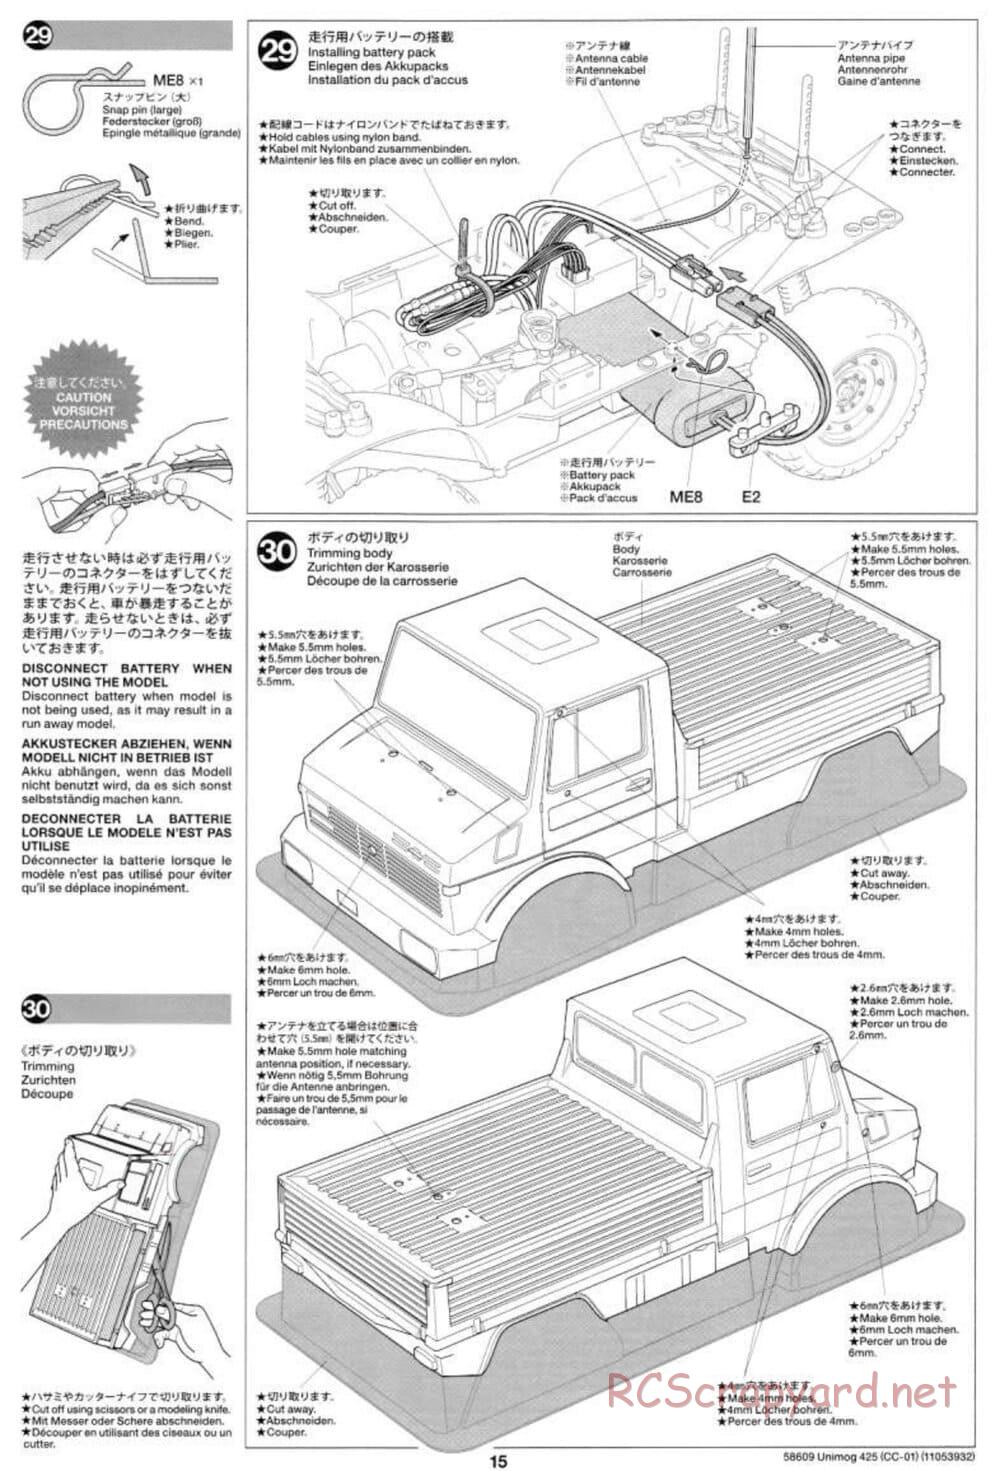 Tamiya - Mercedes-Benz Unimog 425 - CC-01 Chassis - Manual - Page 15